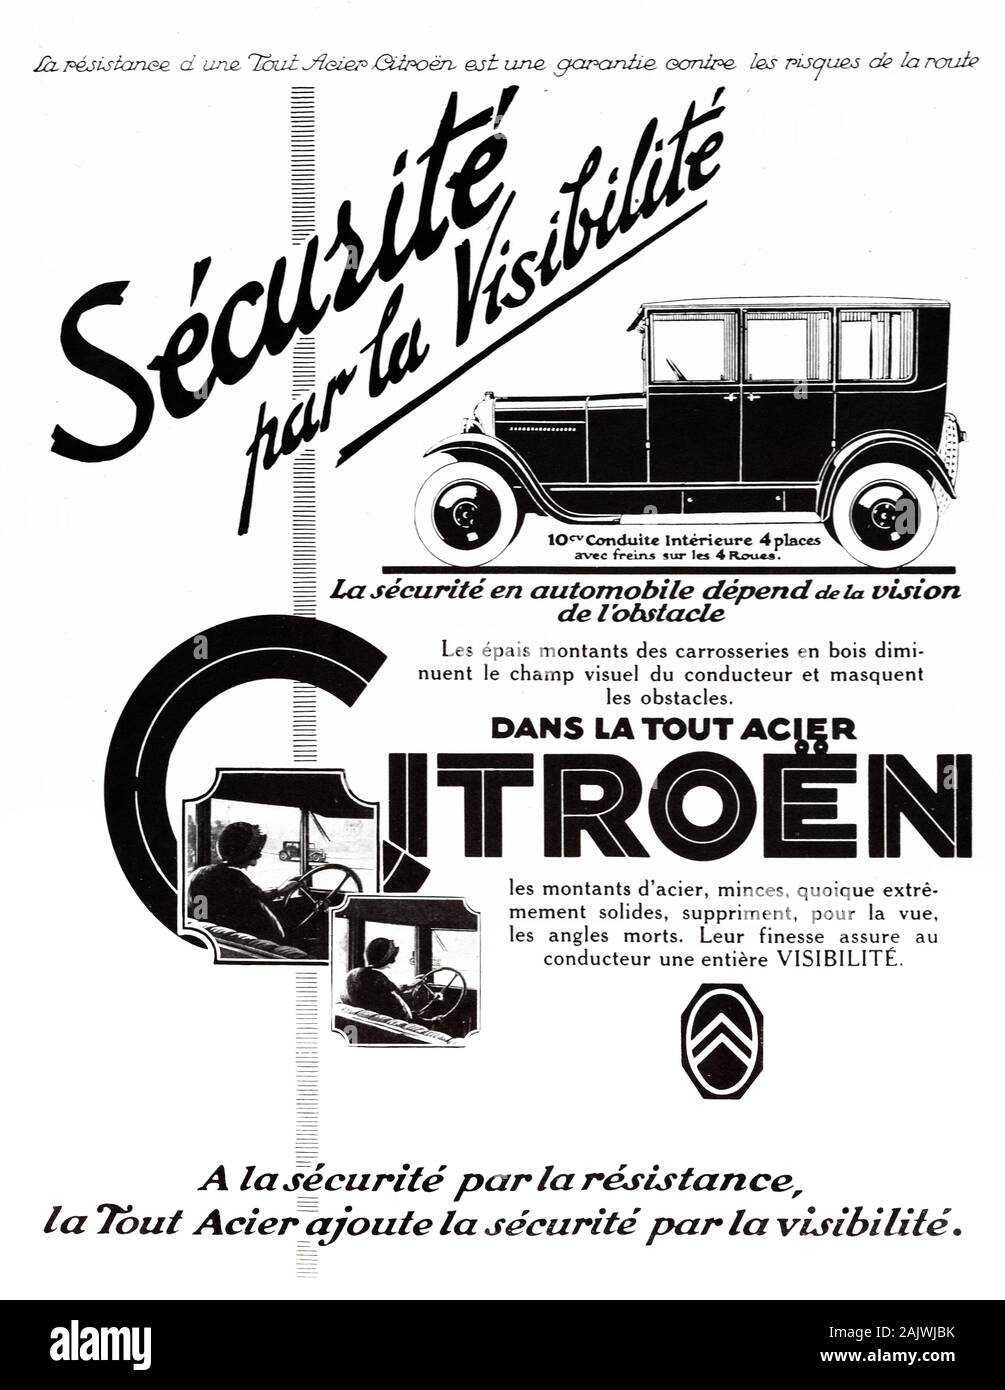 Old Advert or Publicity for Citroën 10 CV 1926 Model Vintage Car or Automobile Stock Photo